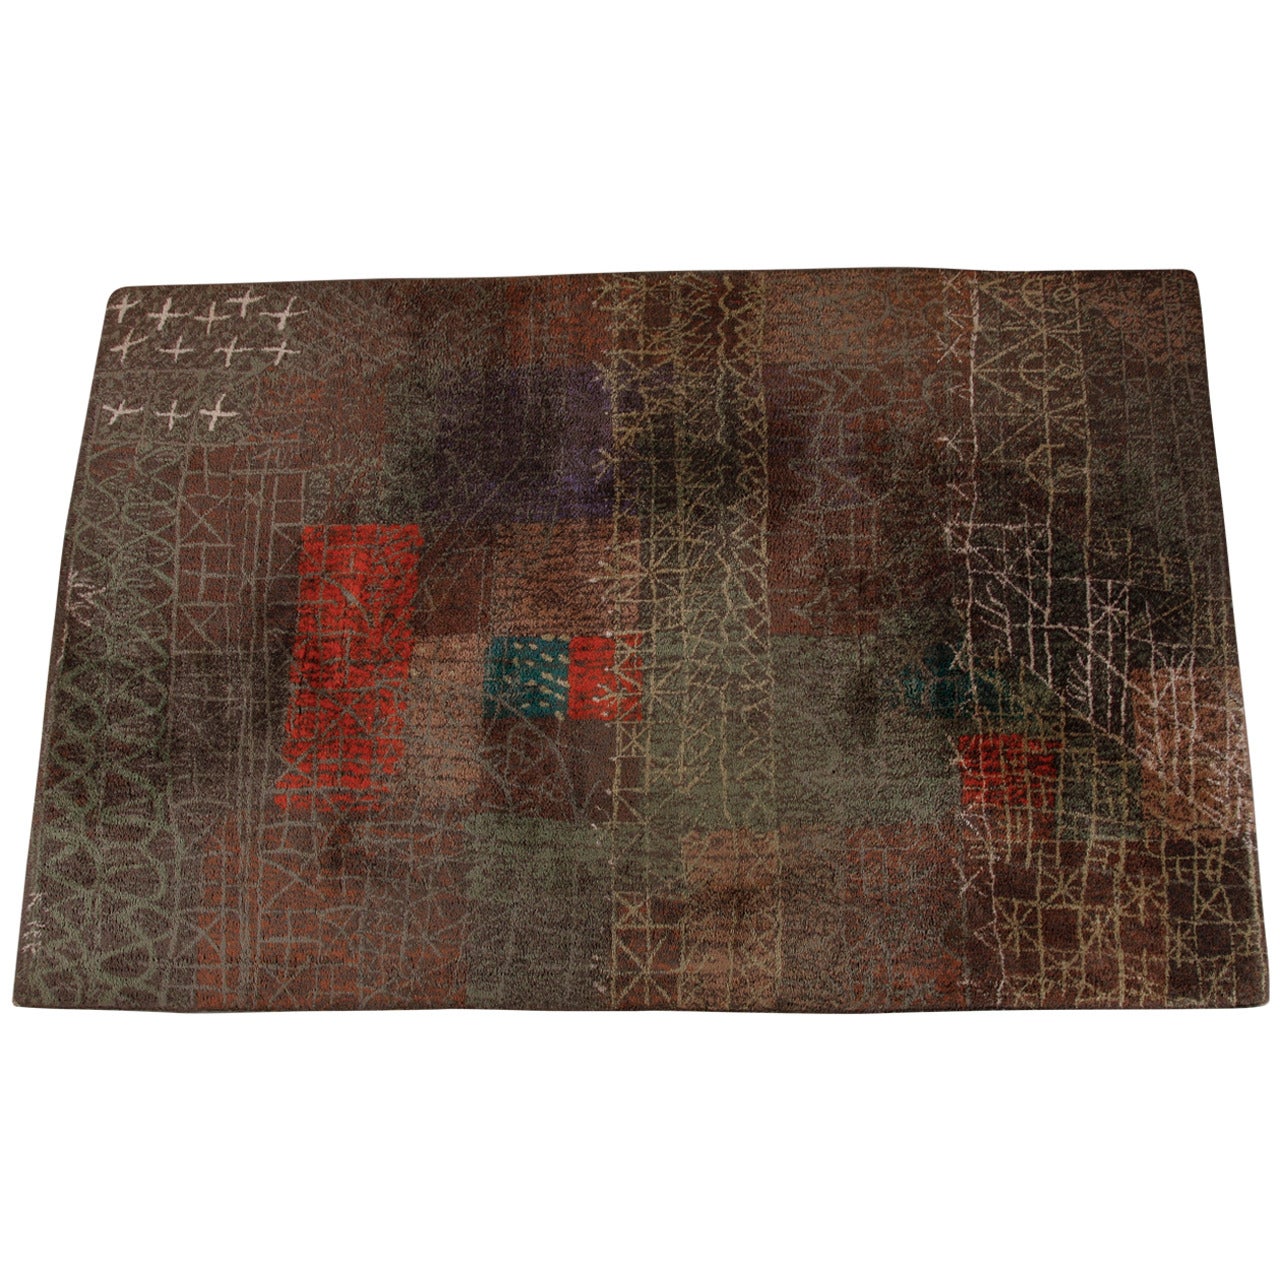 Paul Klee Carpet